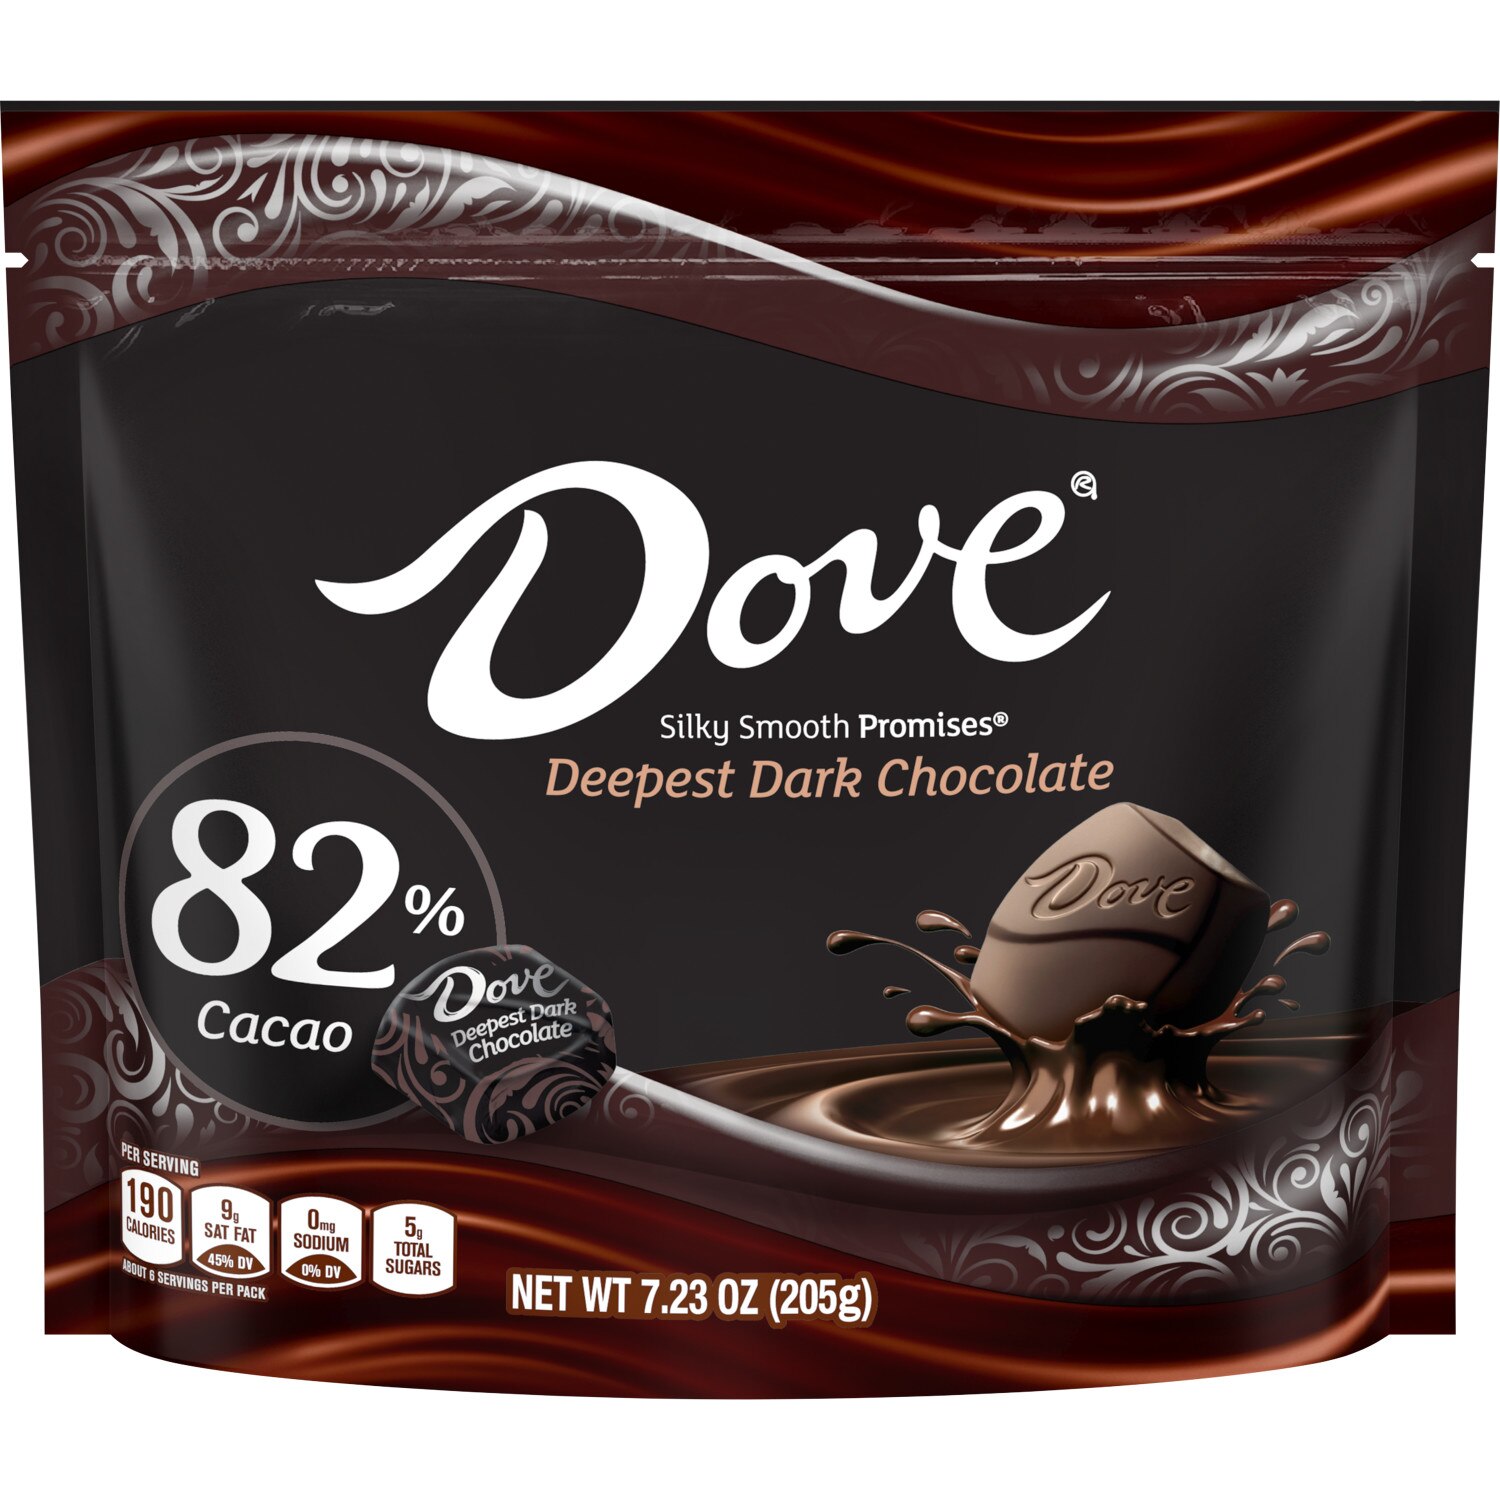 DOVE PROMISES Deepest Dark Chocolate 82% Cacao, 7.23 OZ